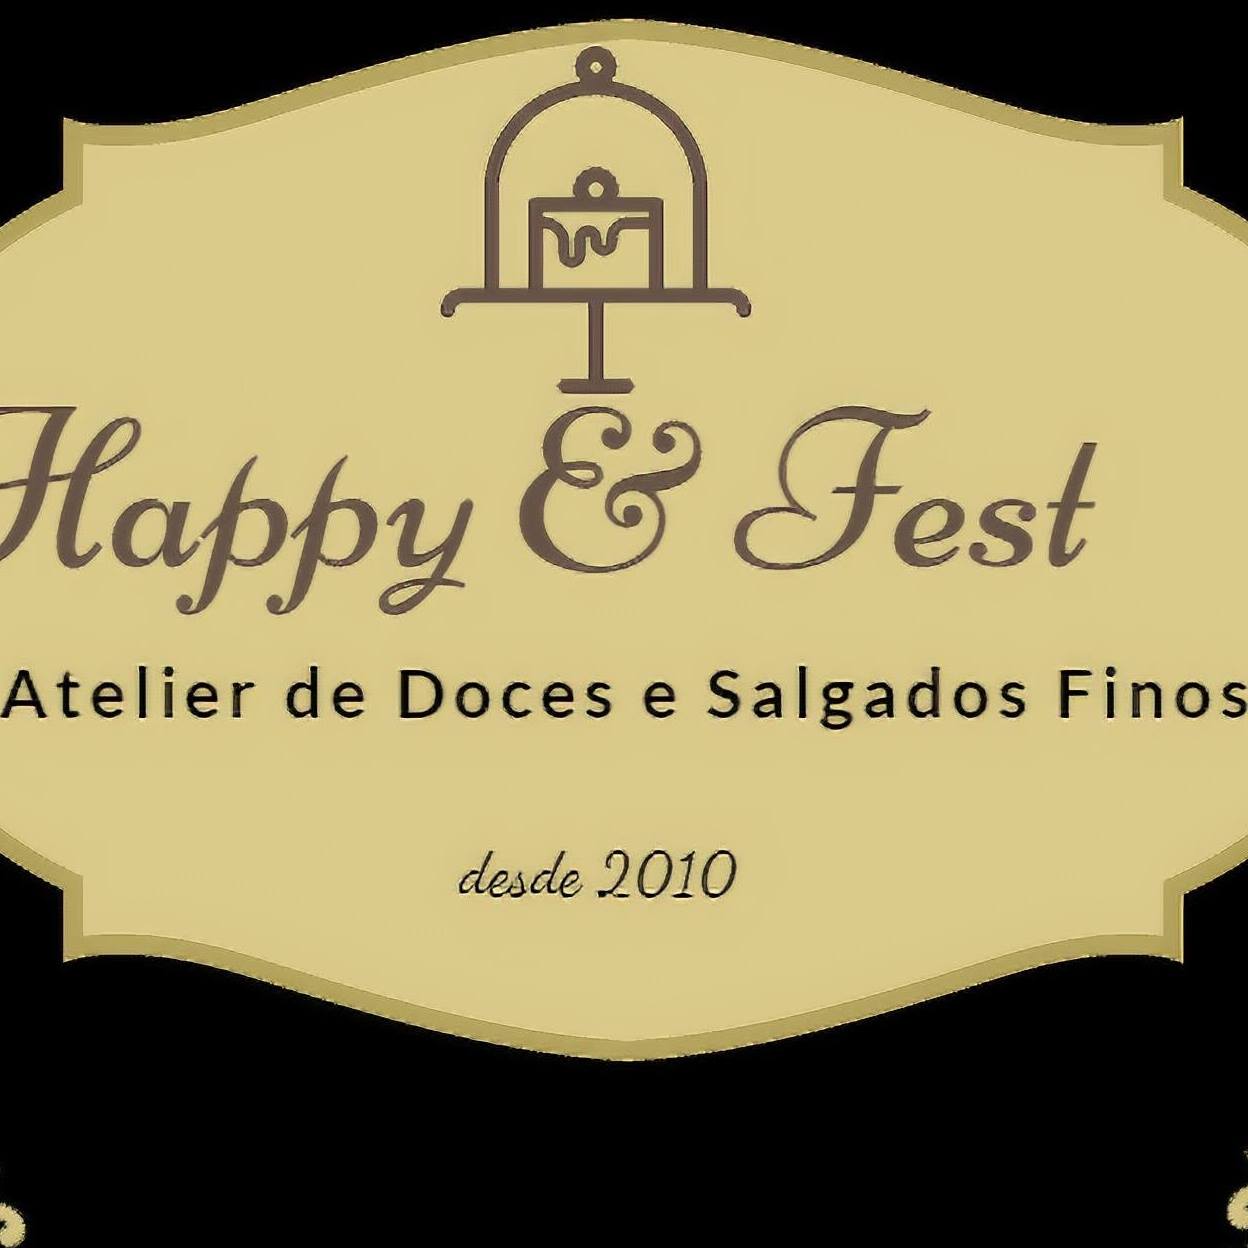 HAPPY AND FEST - Brasília, DF